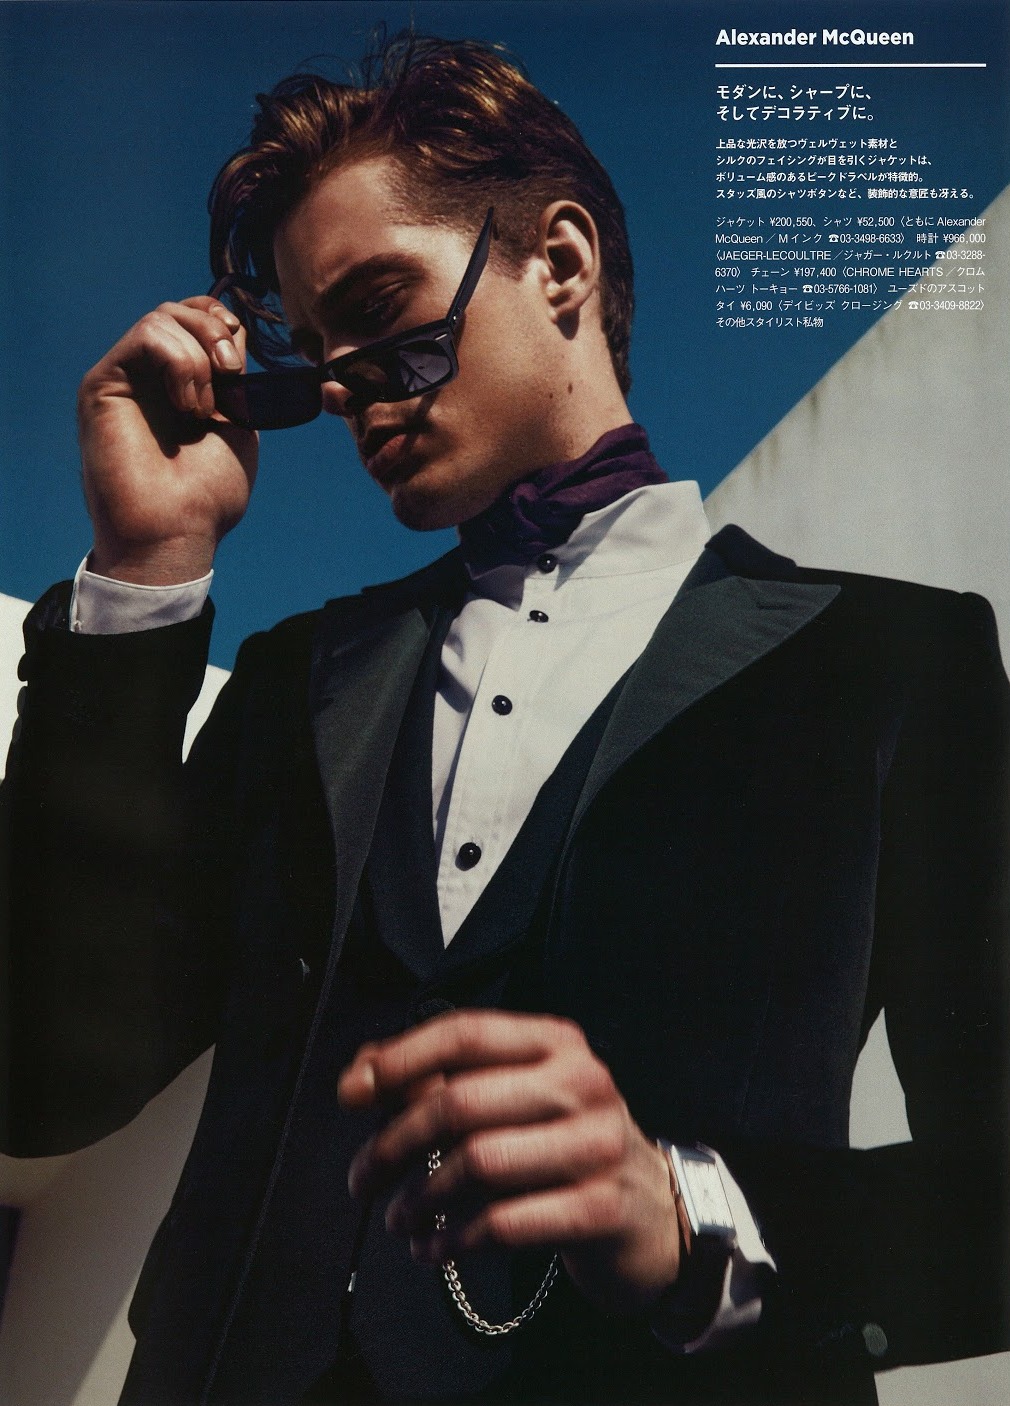 Greg Nawrat Models Luxurious Eveningwear Styles for GQ Japan